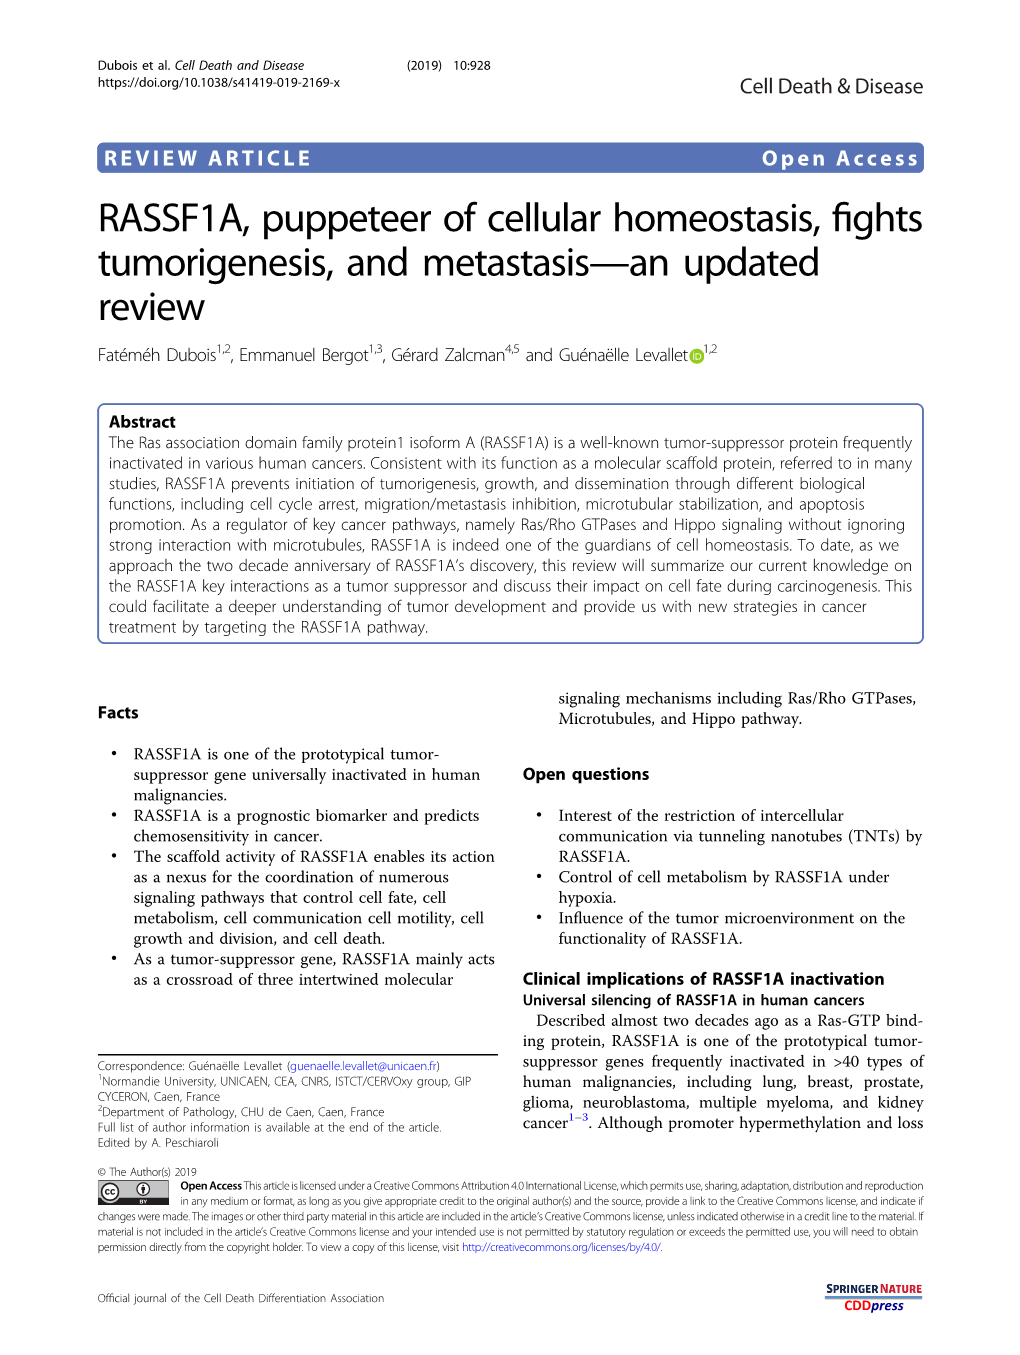 RASSF1A, Puppeteer of Cellular Homeostasis, Fights Tumorigenesis